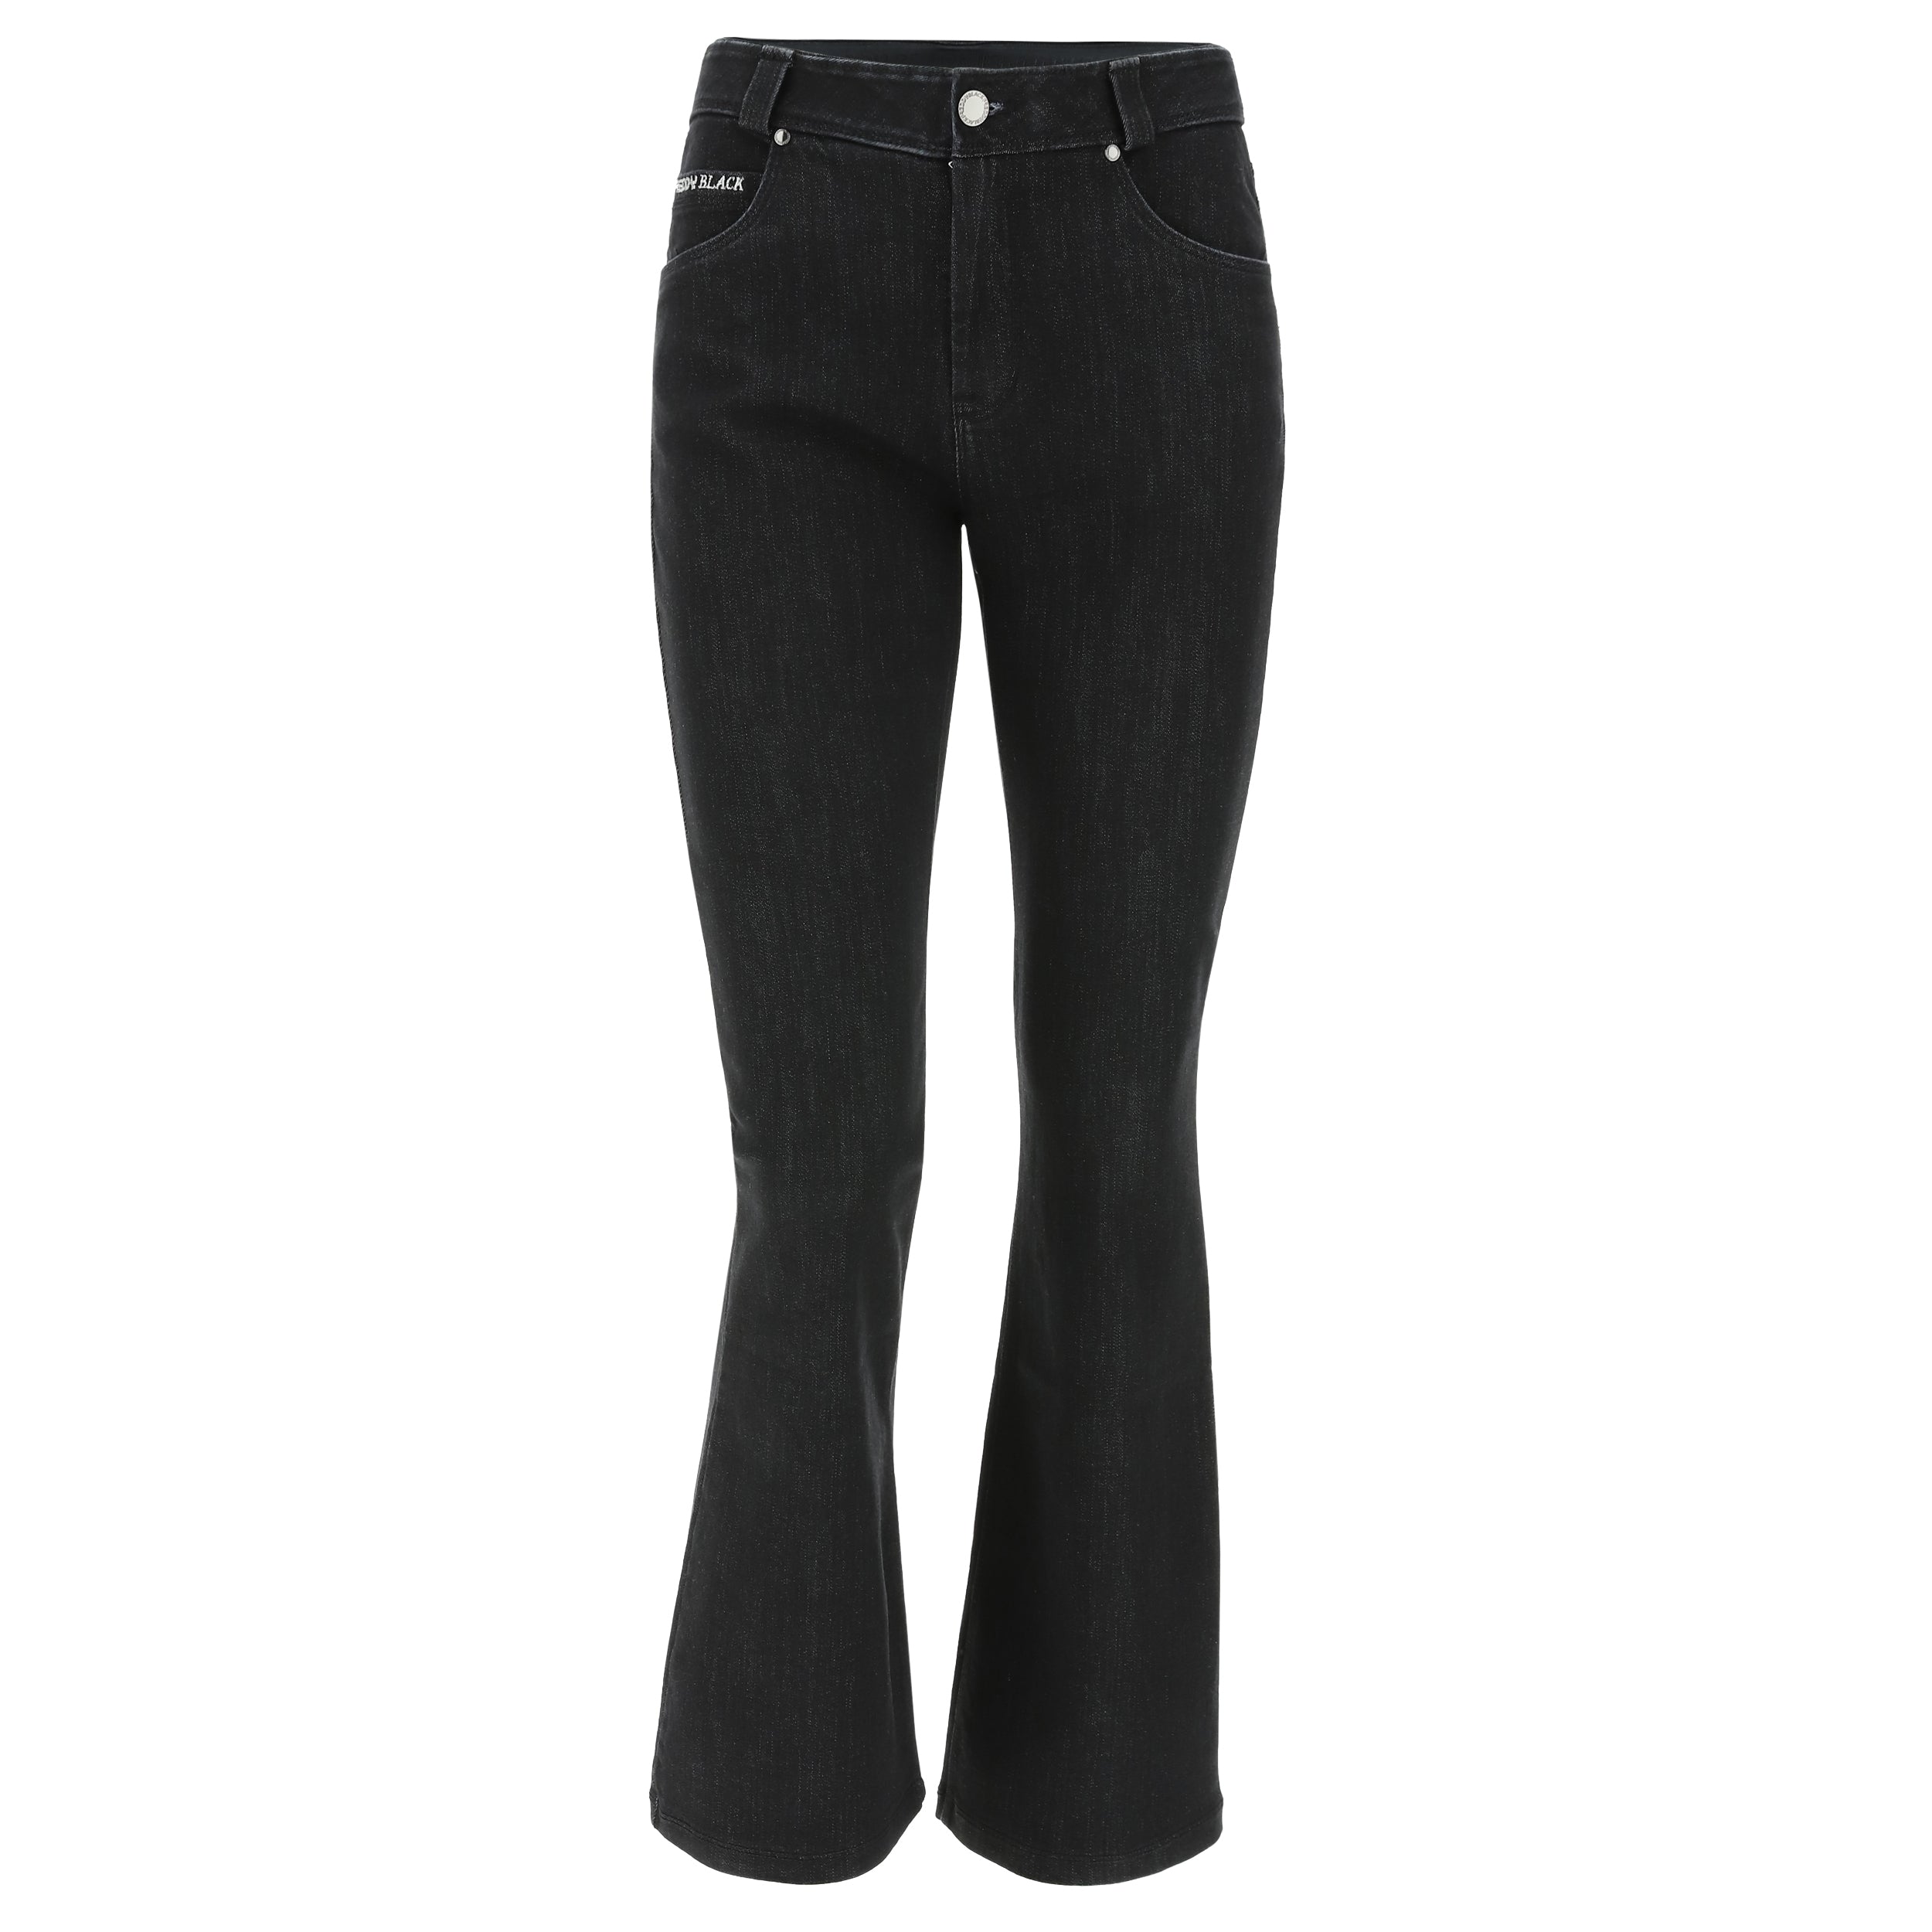 Pantroom FREDDY Stretch BLACK13RF103-J7N) in – Black BLACK Cropped Flare Freddy Benelux D Jeans